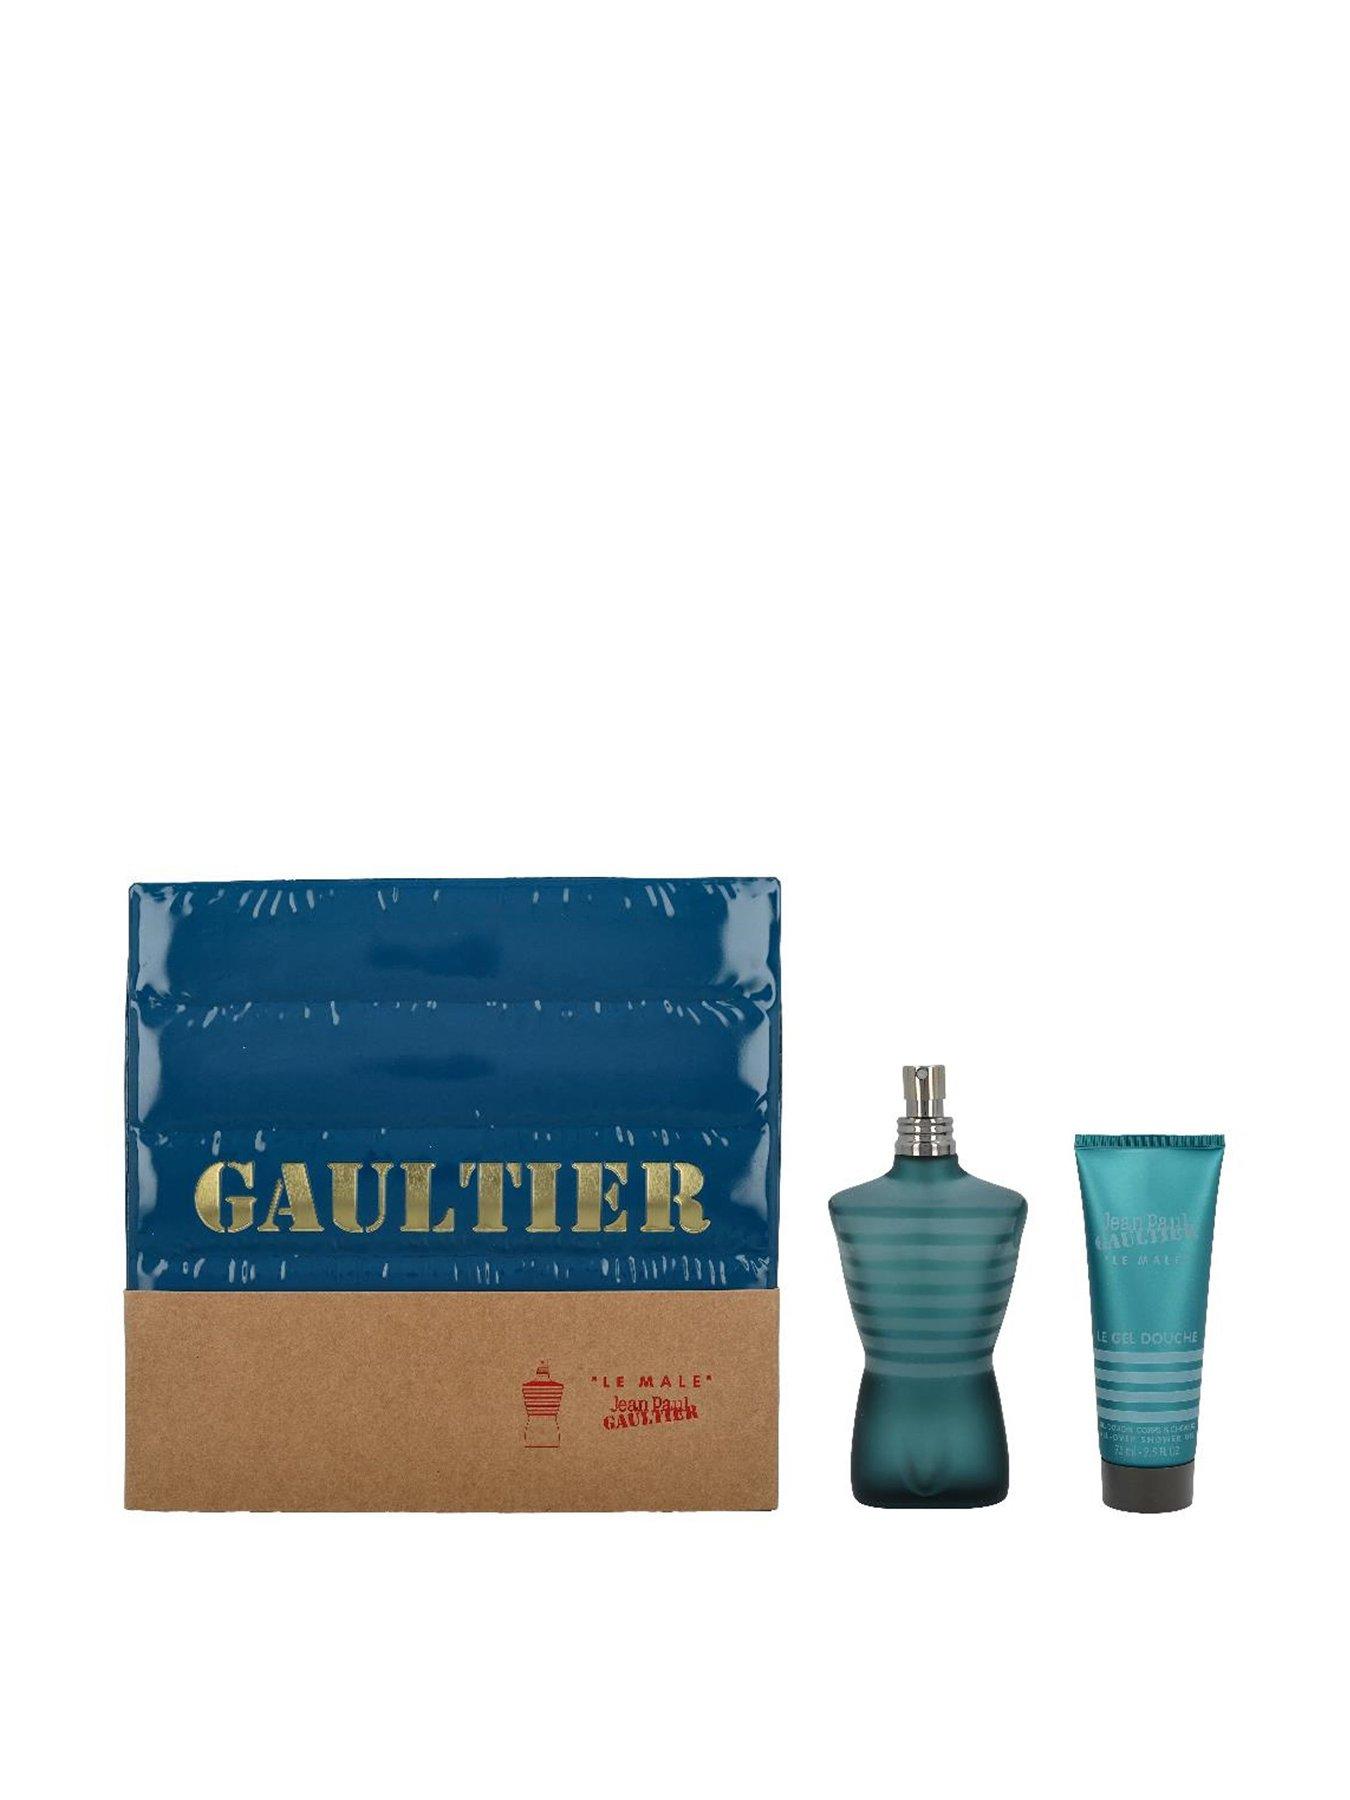 Jean Gaultier Le Male 125ml EDT Gift Set | littlewoods.com